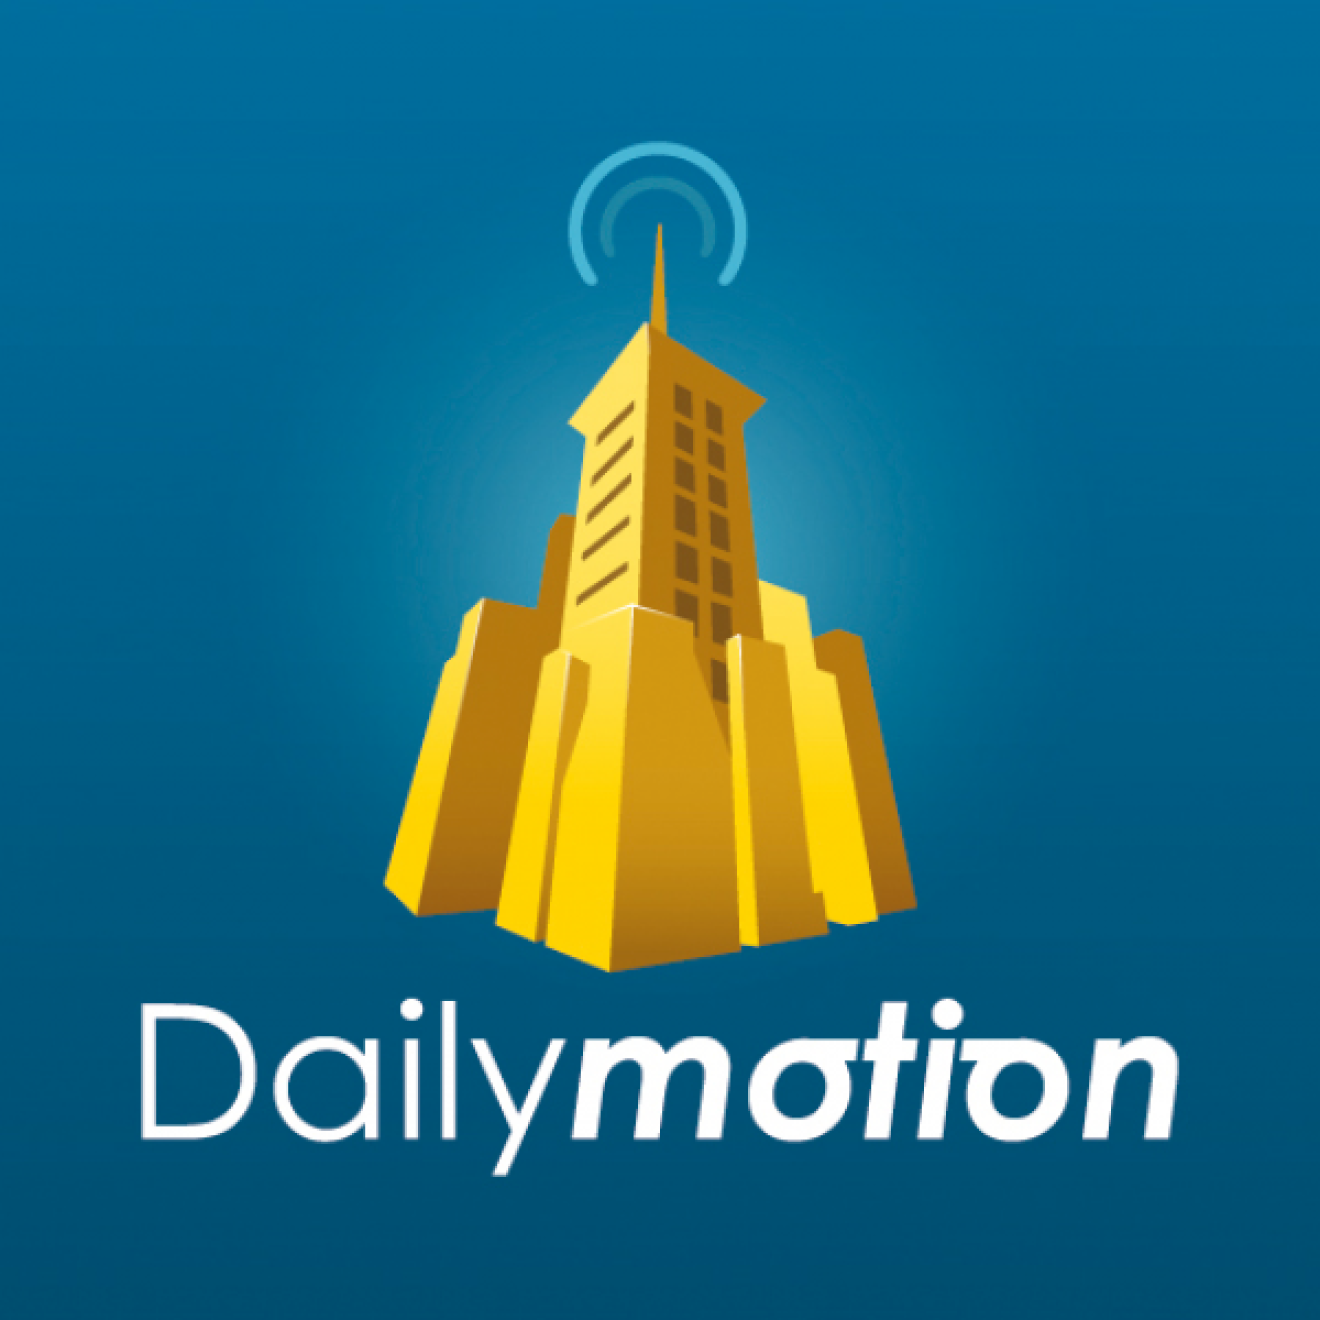 100 Dailymotion Views / Aufrufe für Dich